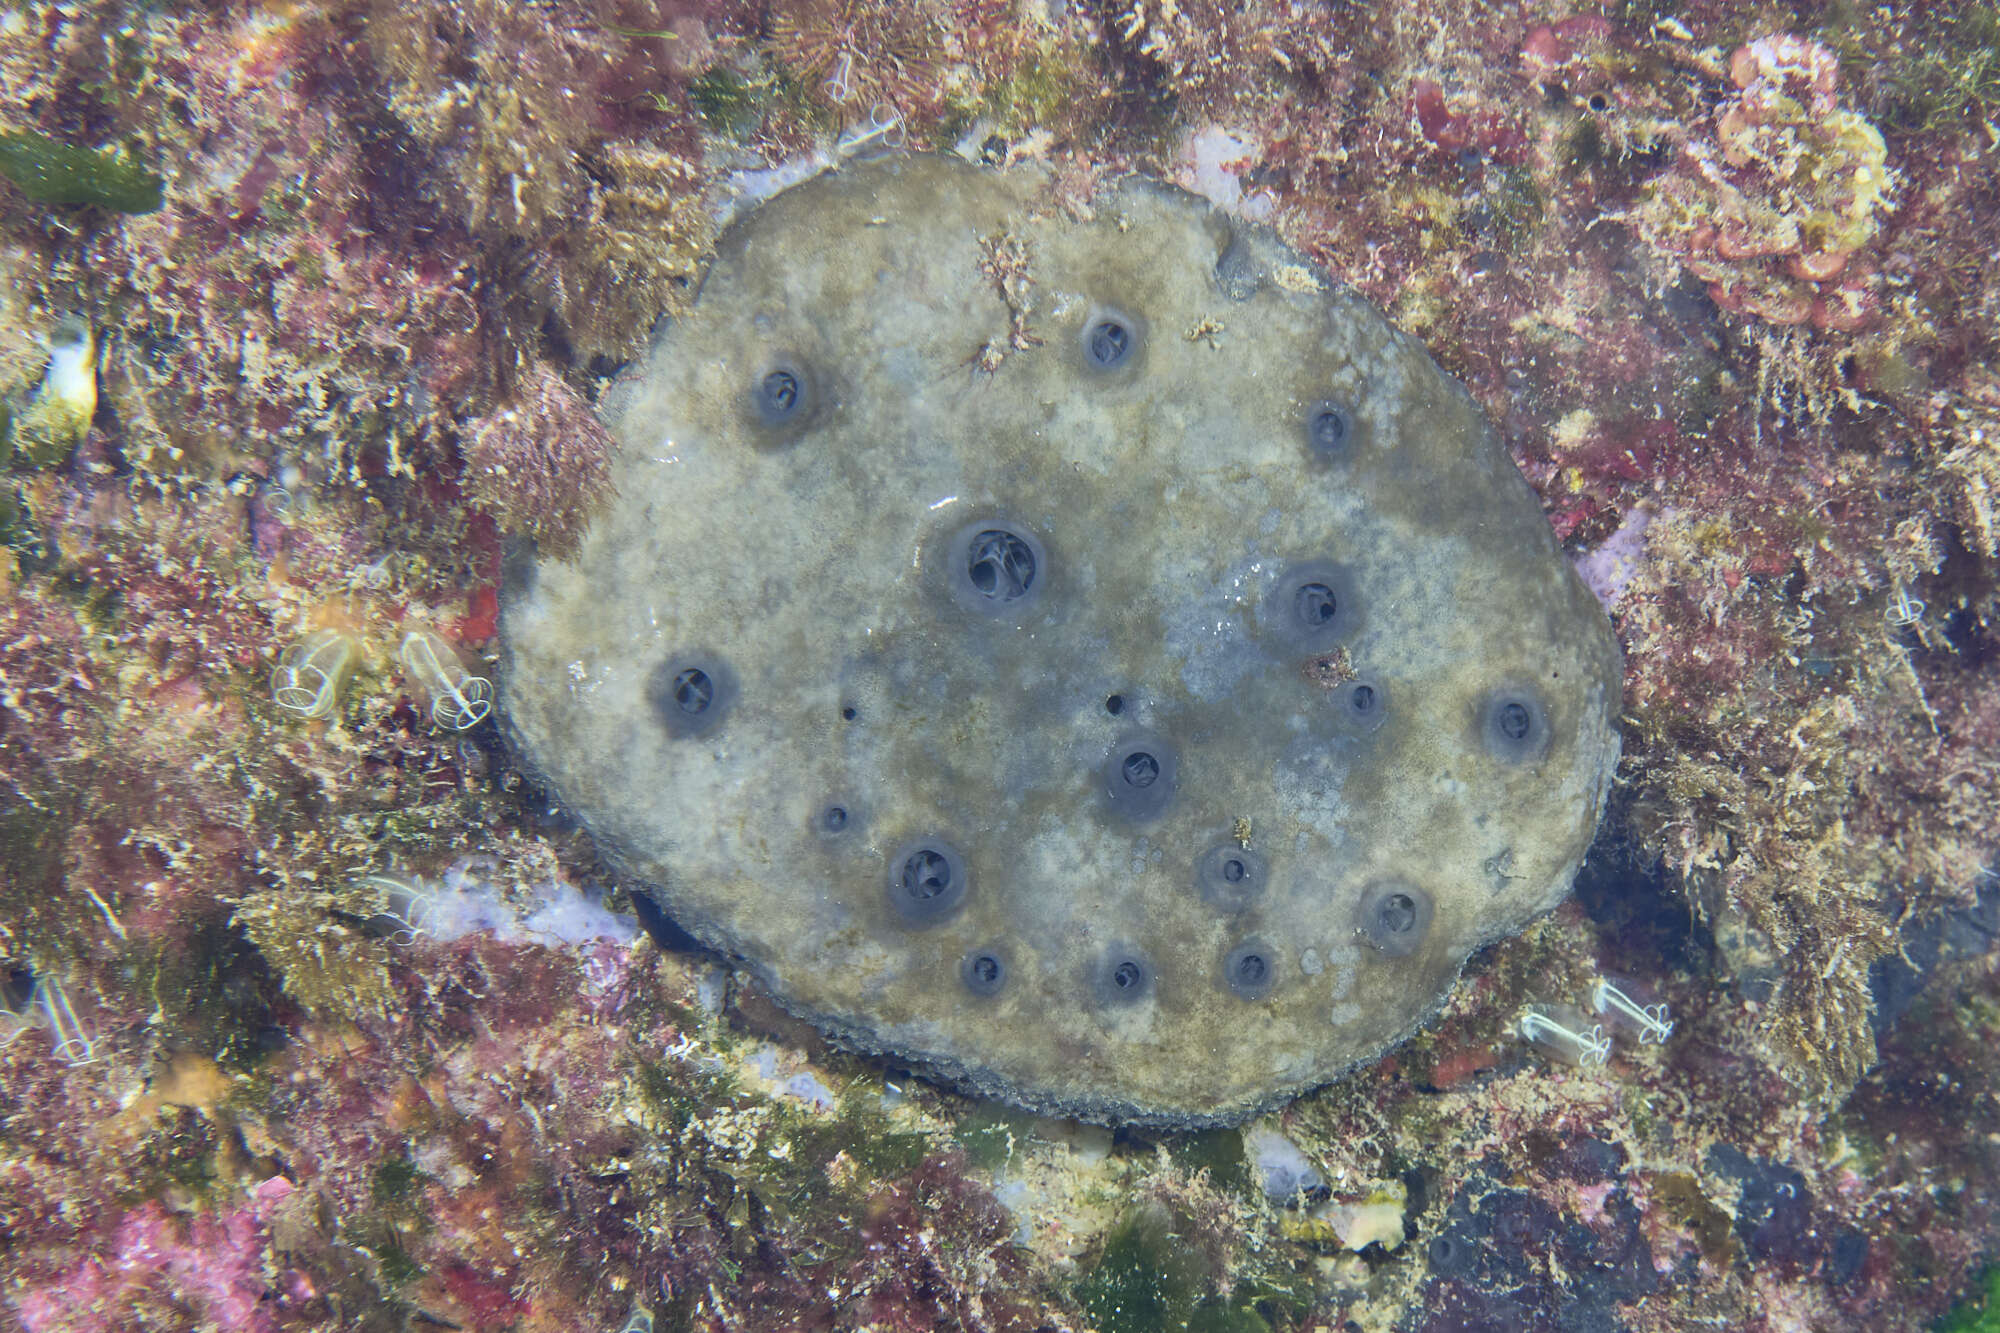 Image of grey leather sponge